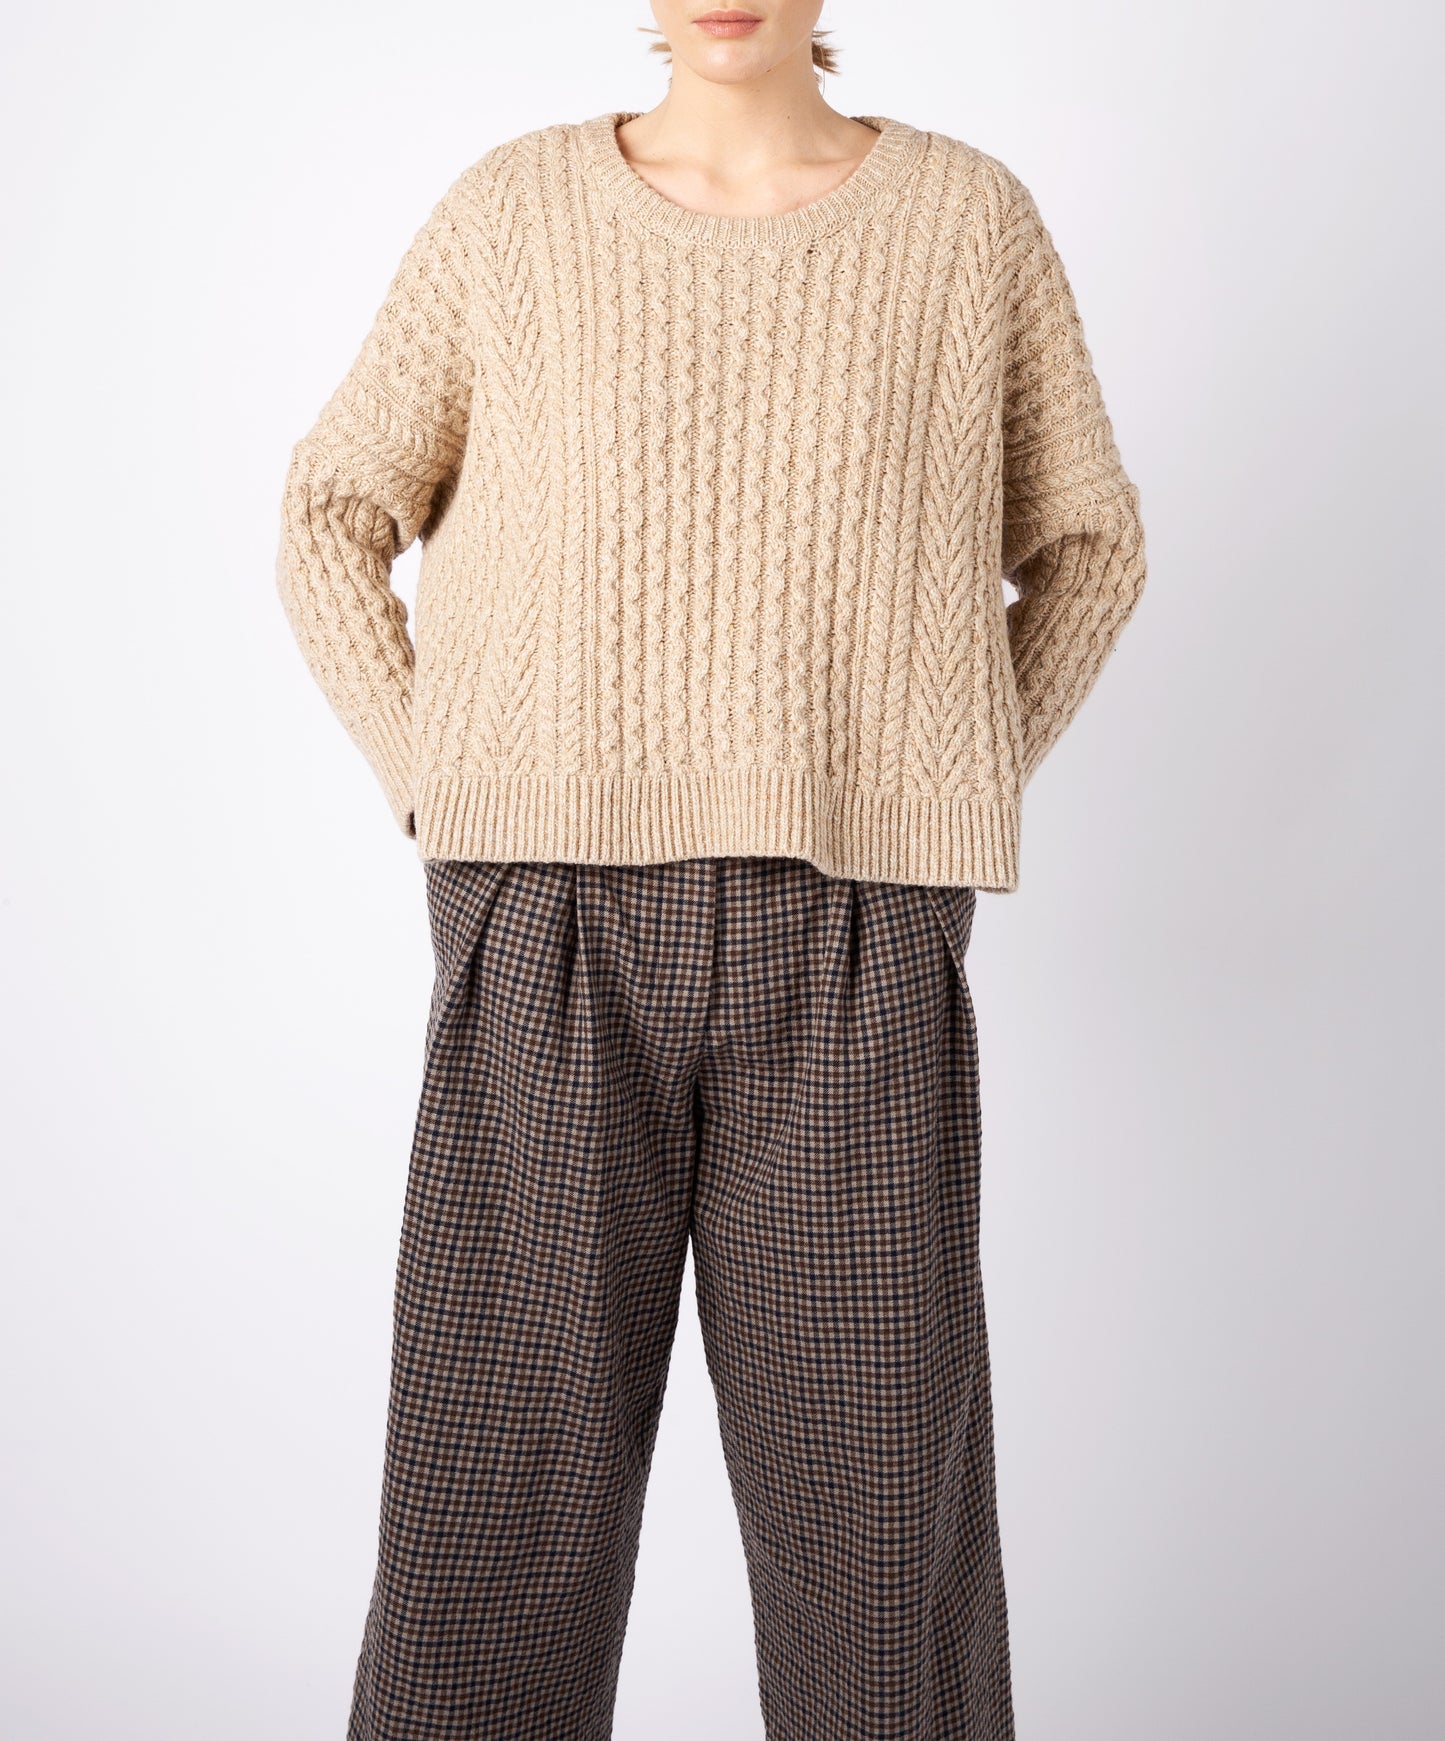 Women's Knitted 'Sorrell' Cropped Aran Sweater Seashell